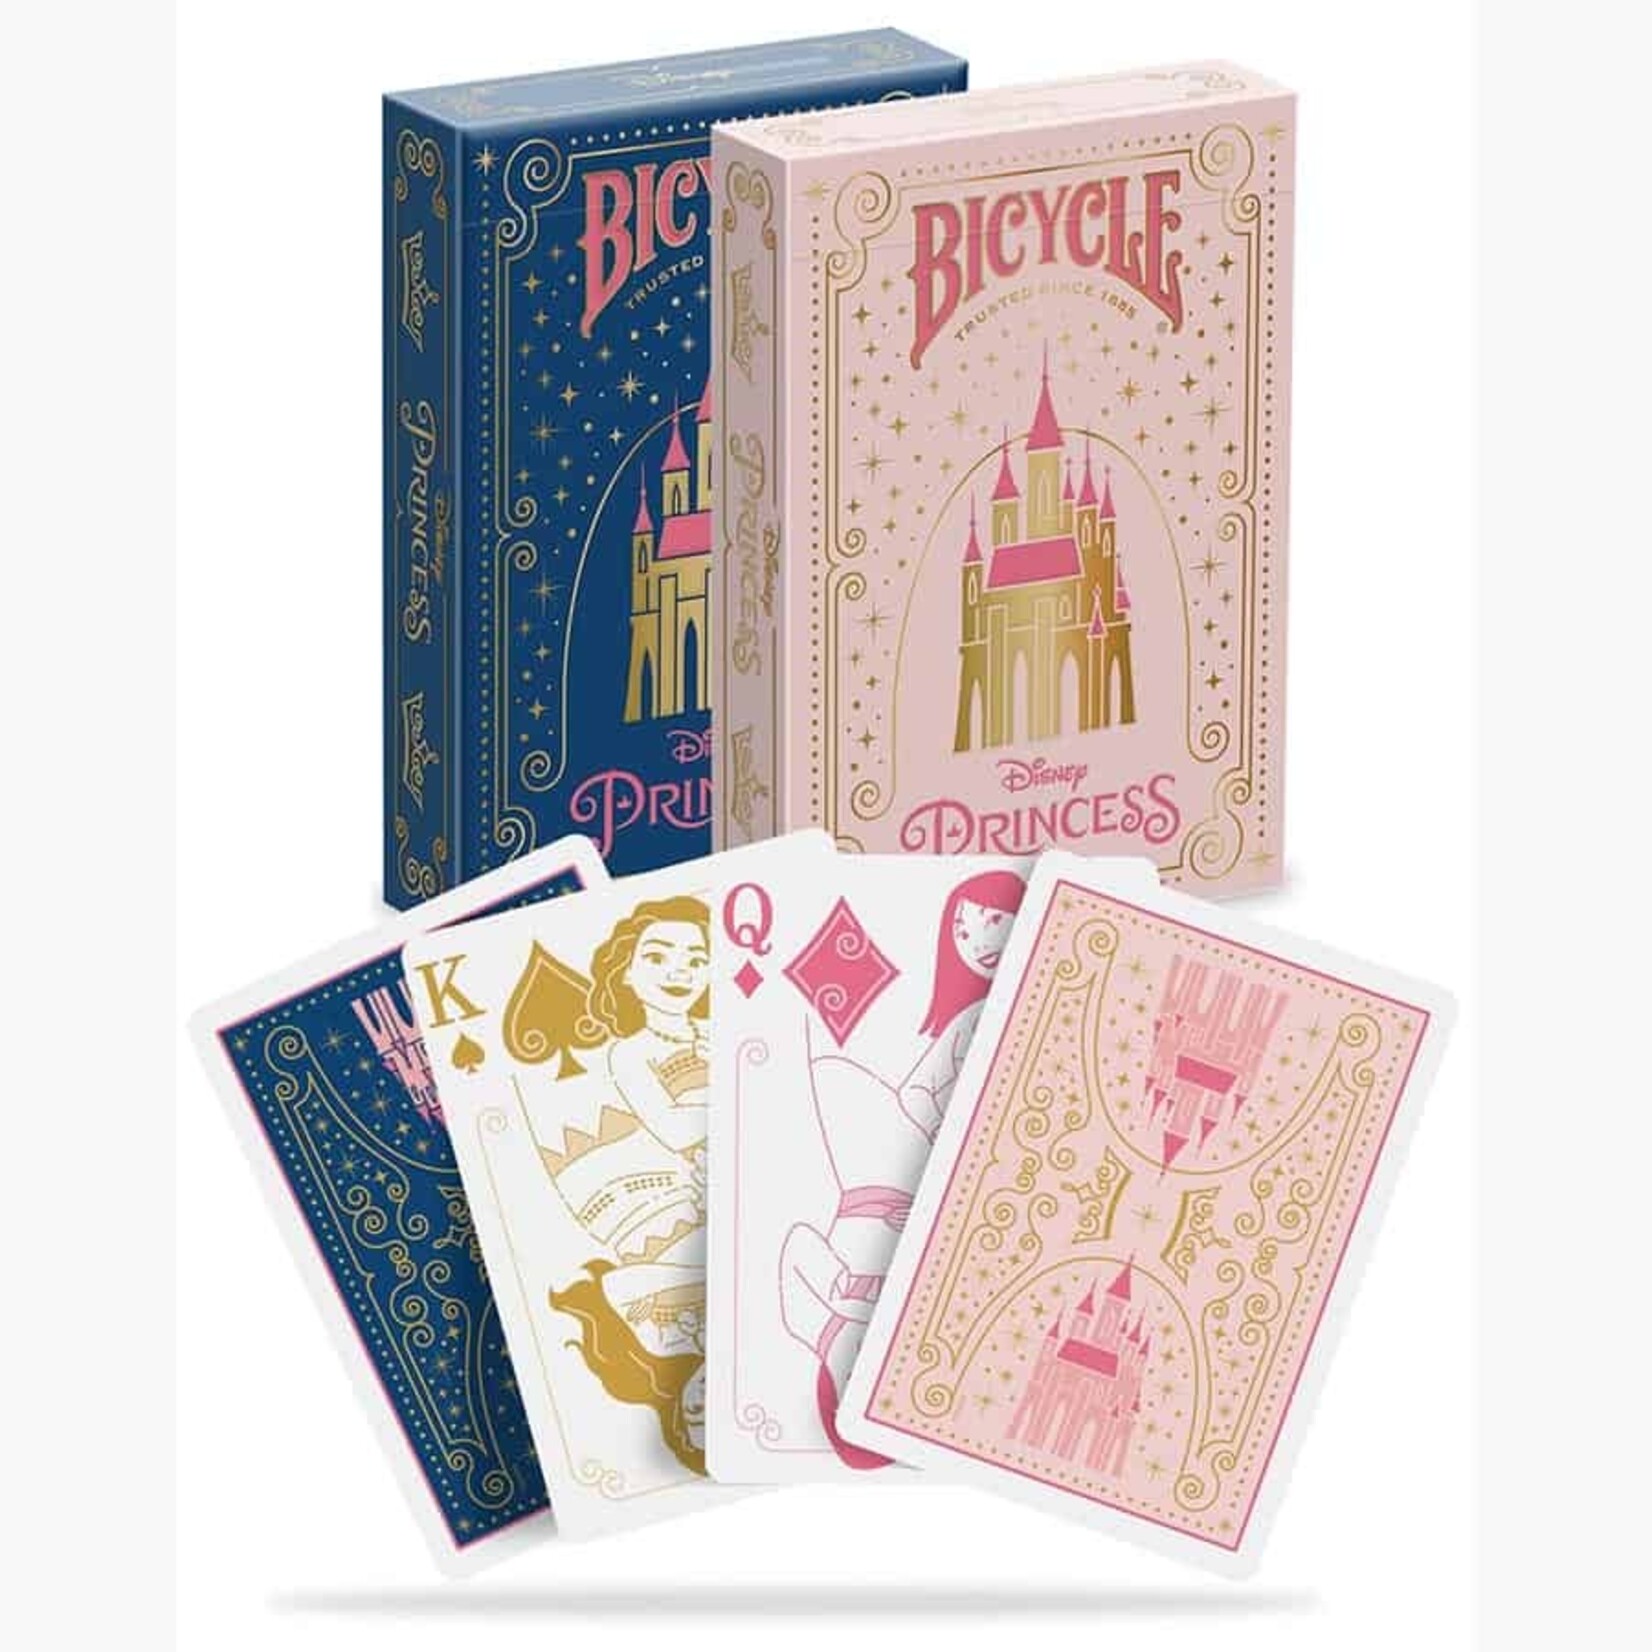 Bicycle Standard Playing Cards (Poker) - Disney Princess